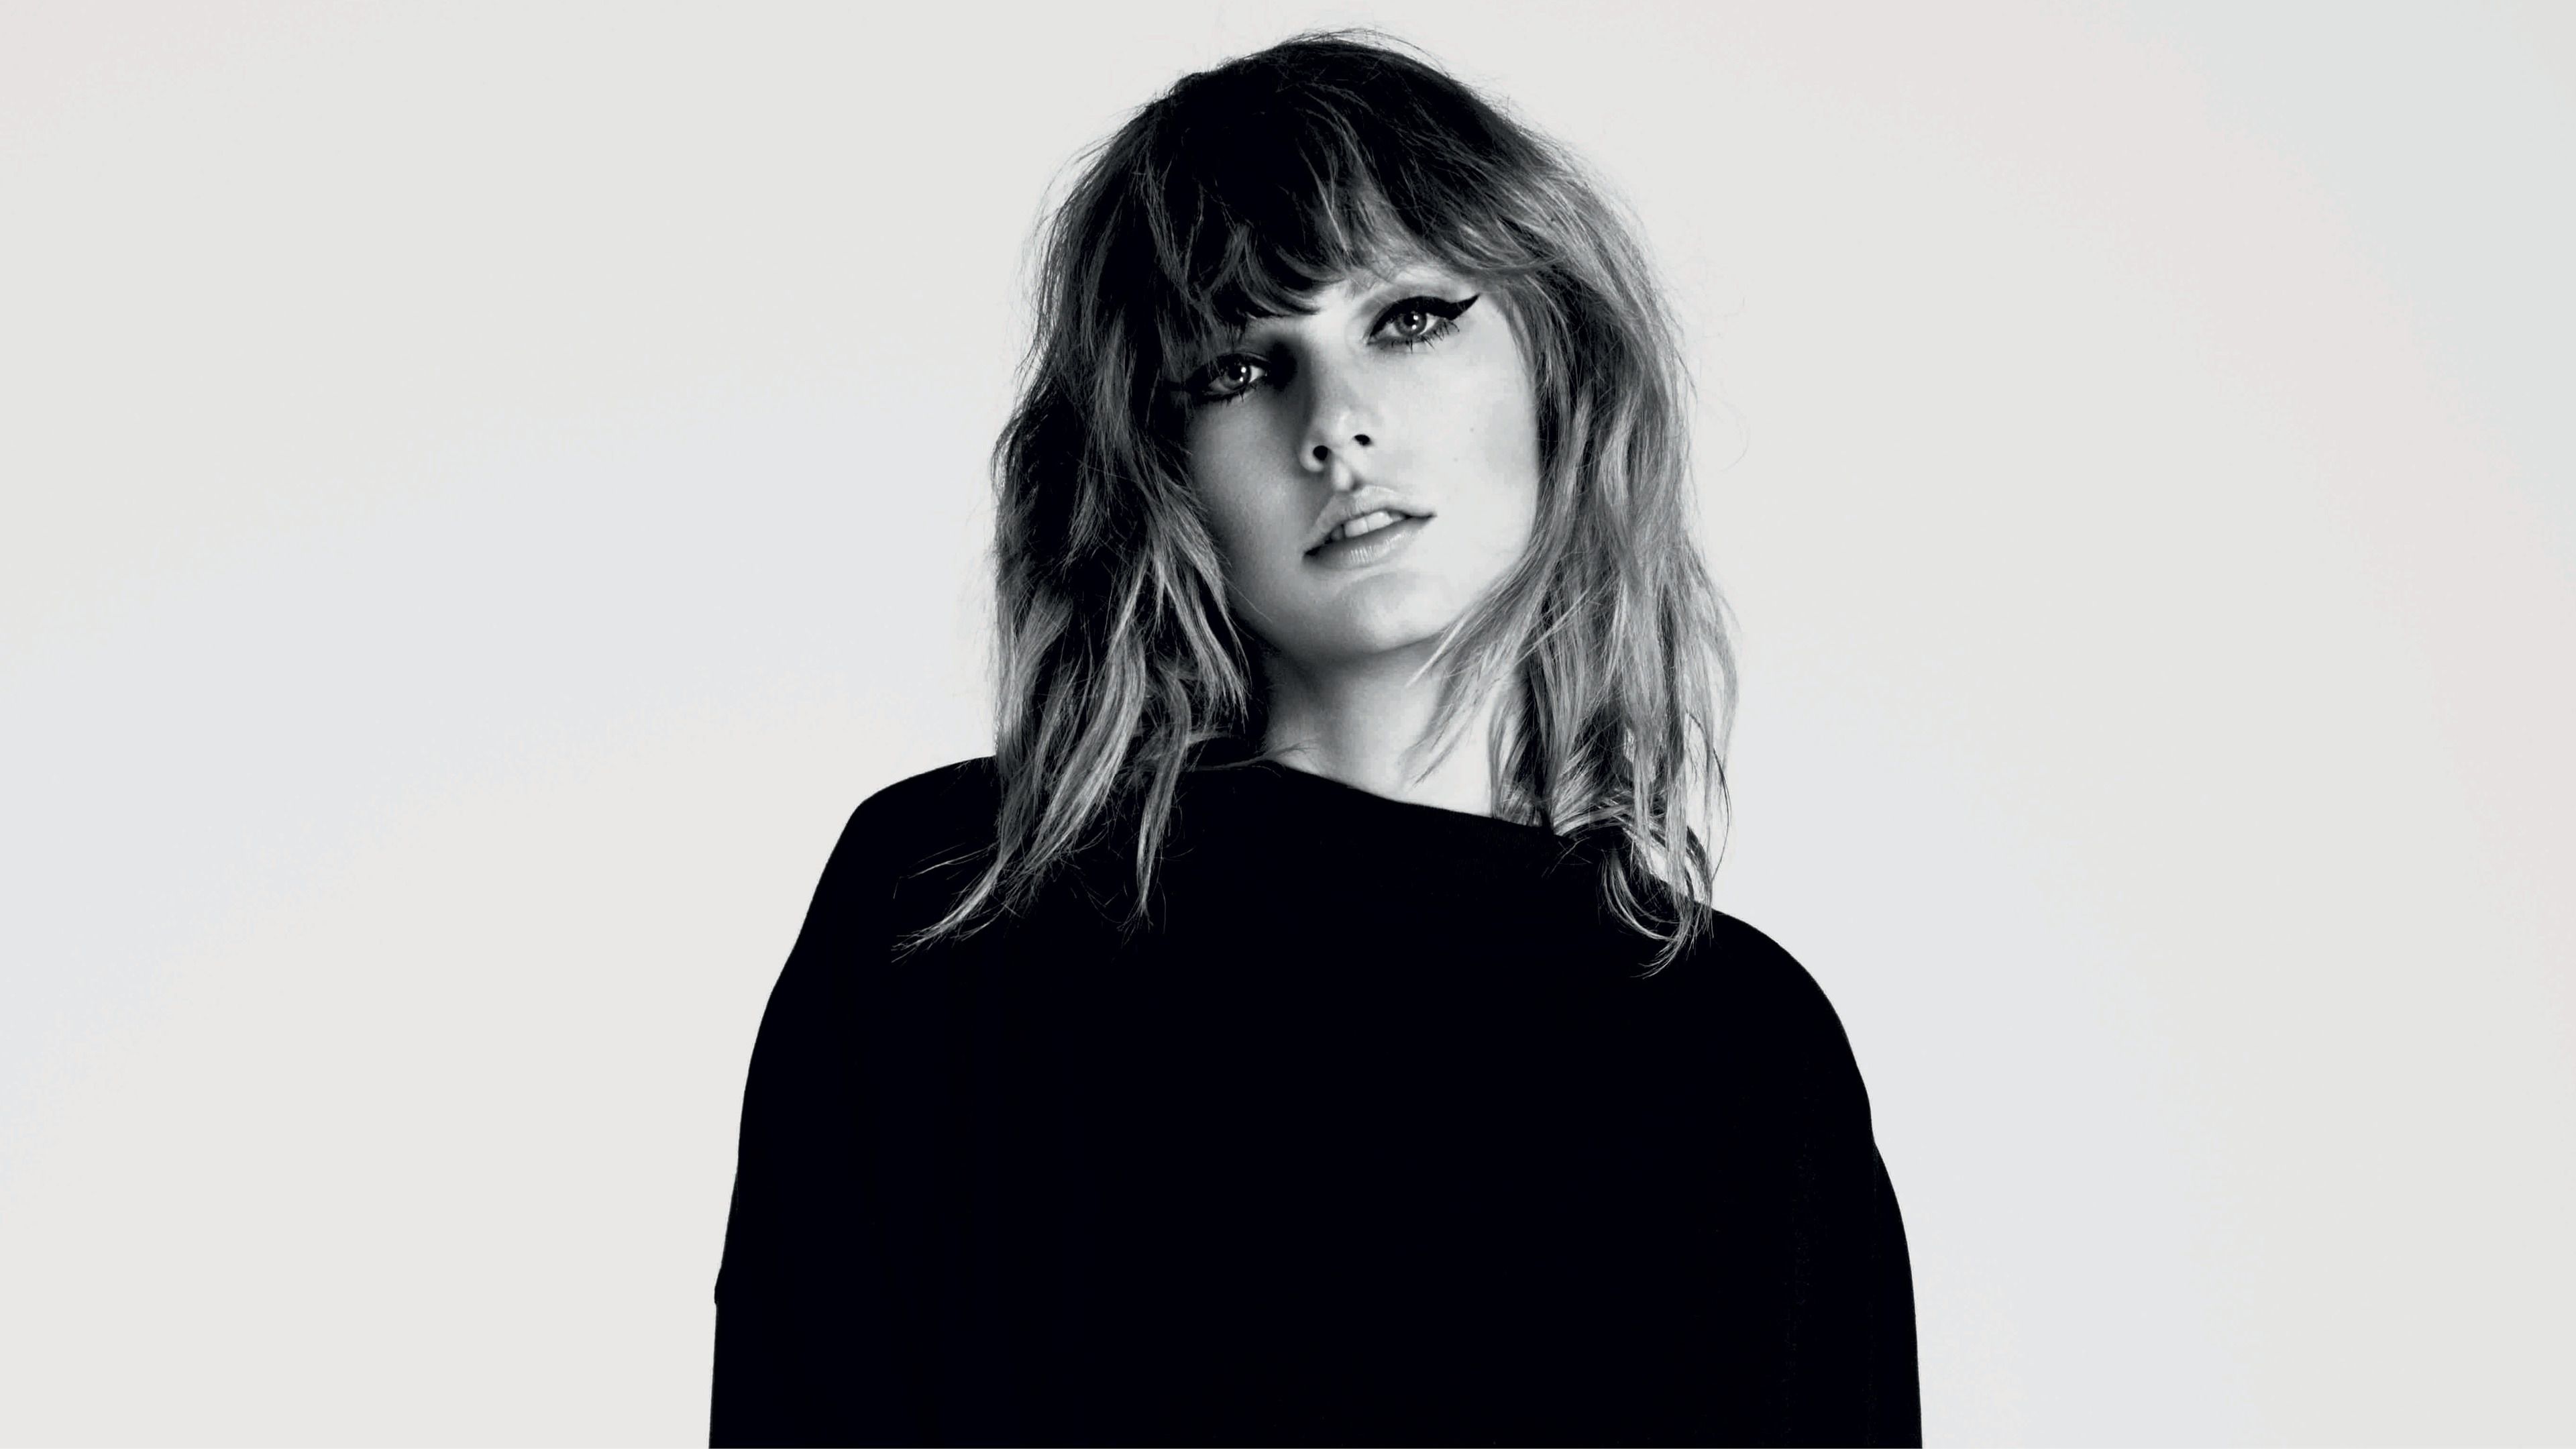 Taylor Swift Gq Magazine Wallpapers